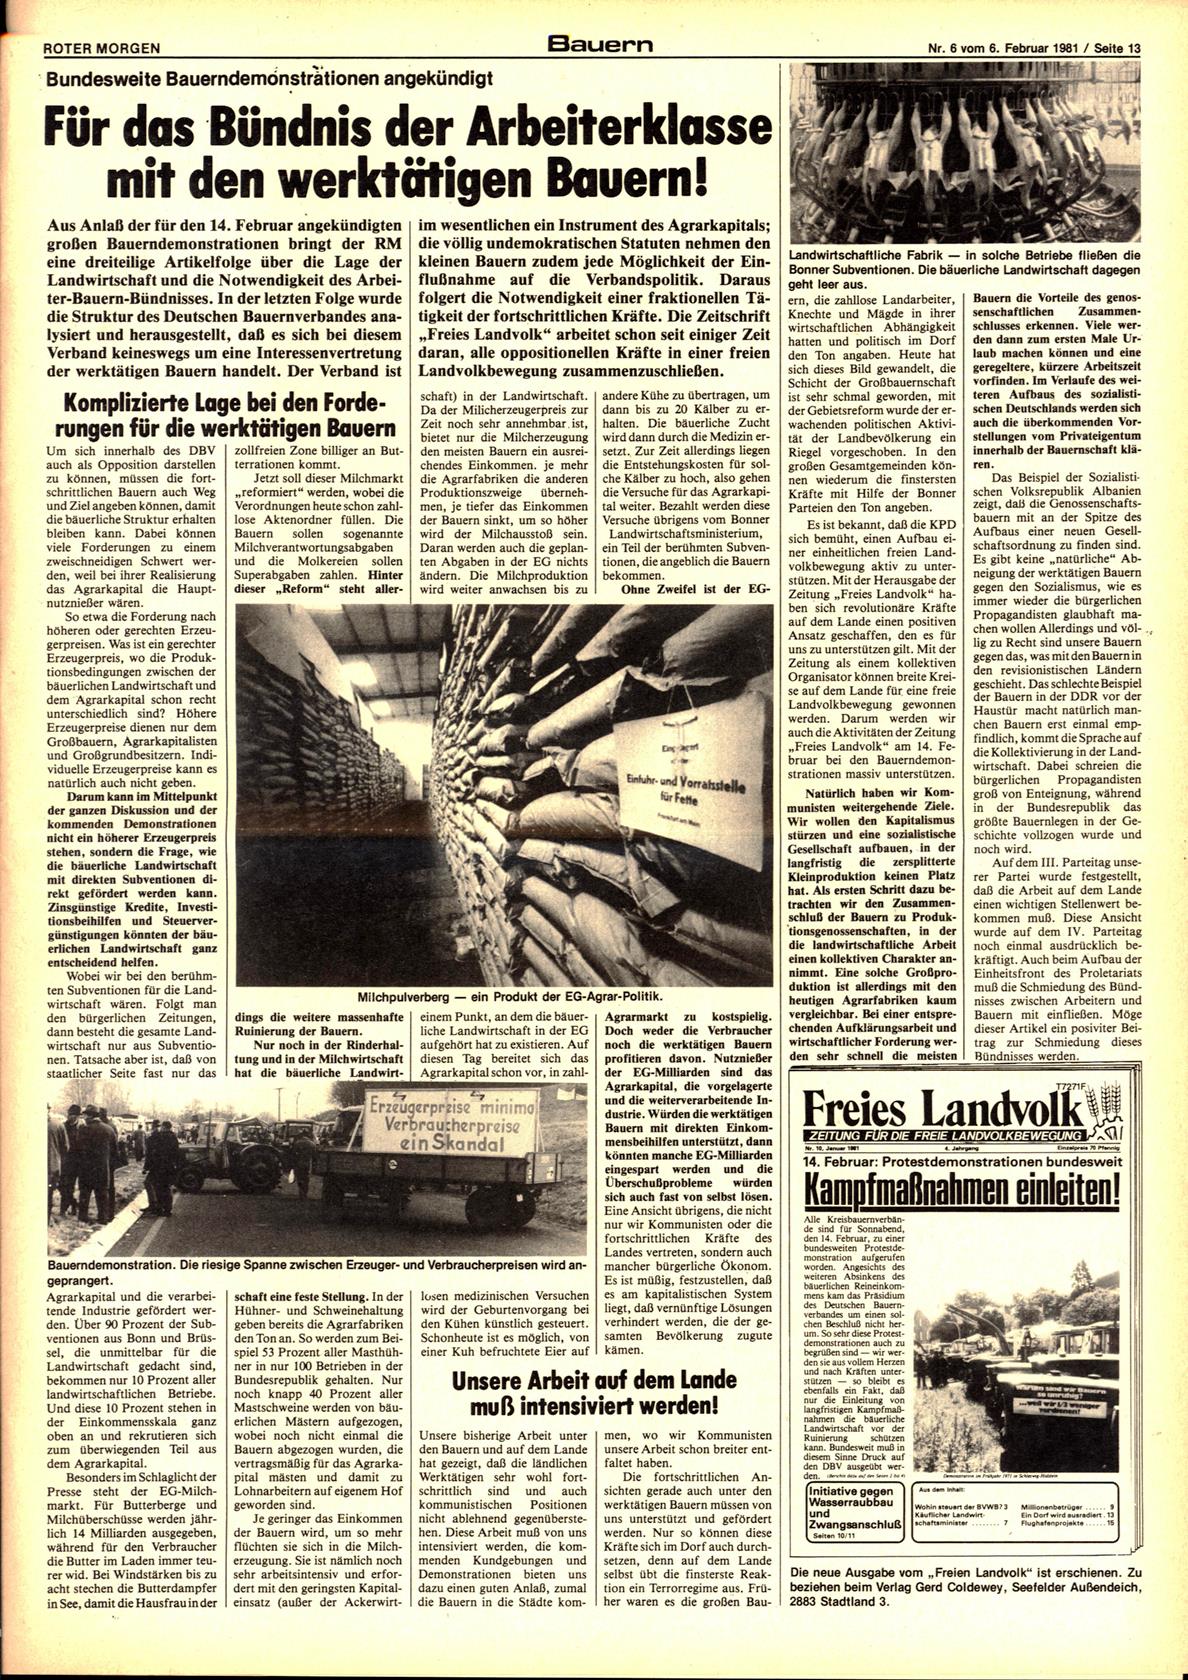 Roter Morgen, 15. Jg., 6. Februar 1981, Nr. 6, Seite 13